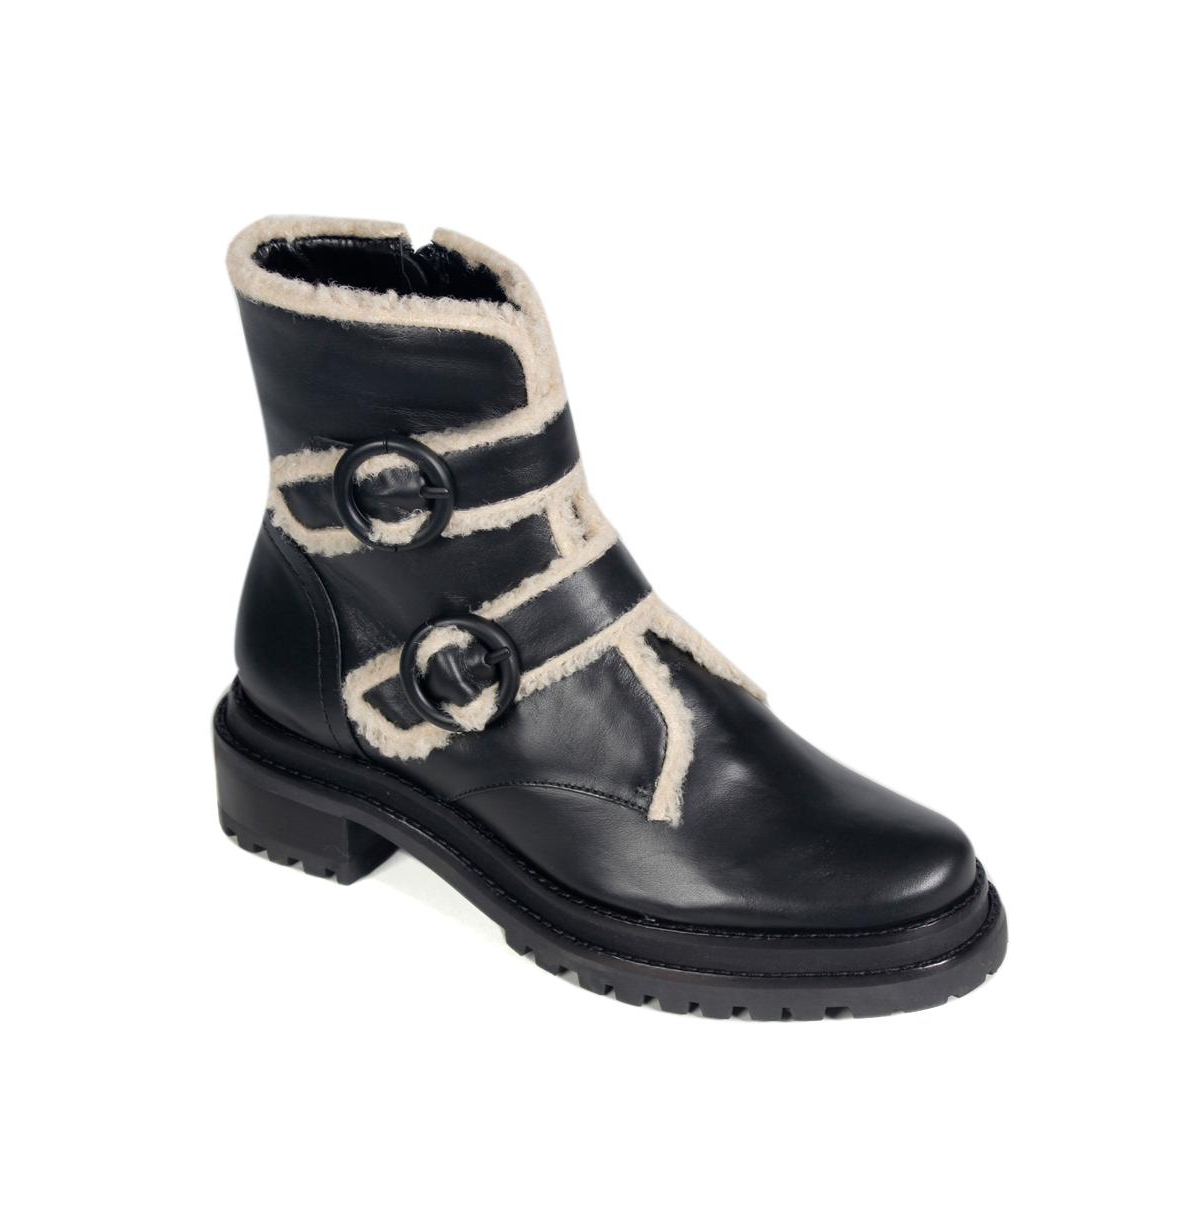 Shoes Women's Genova Cozy Buckled Combat Boots - Black